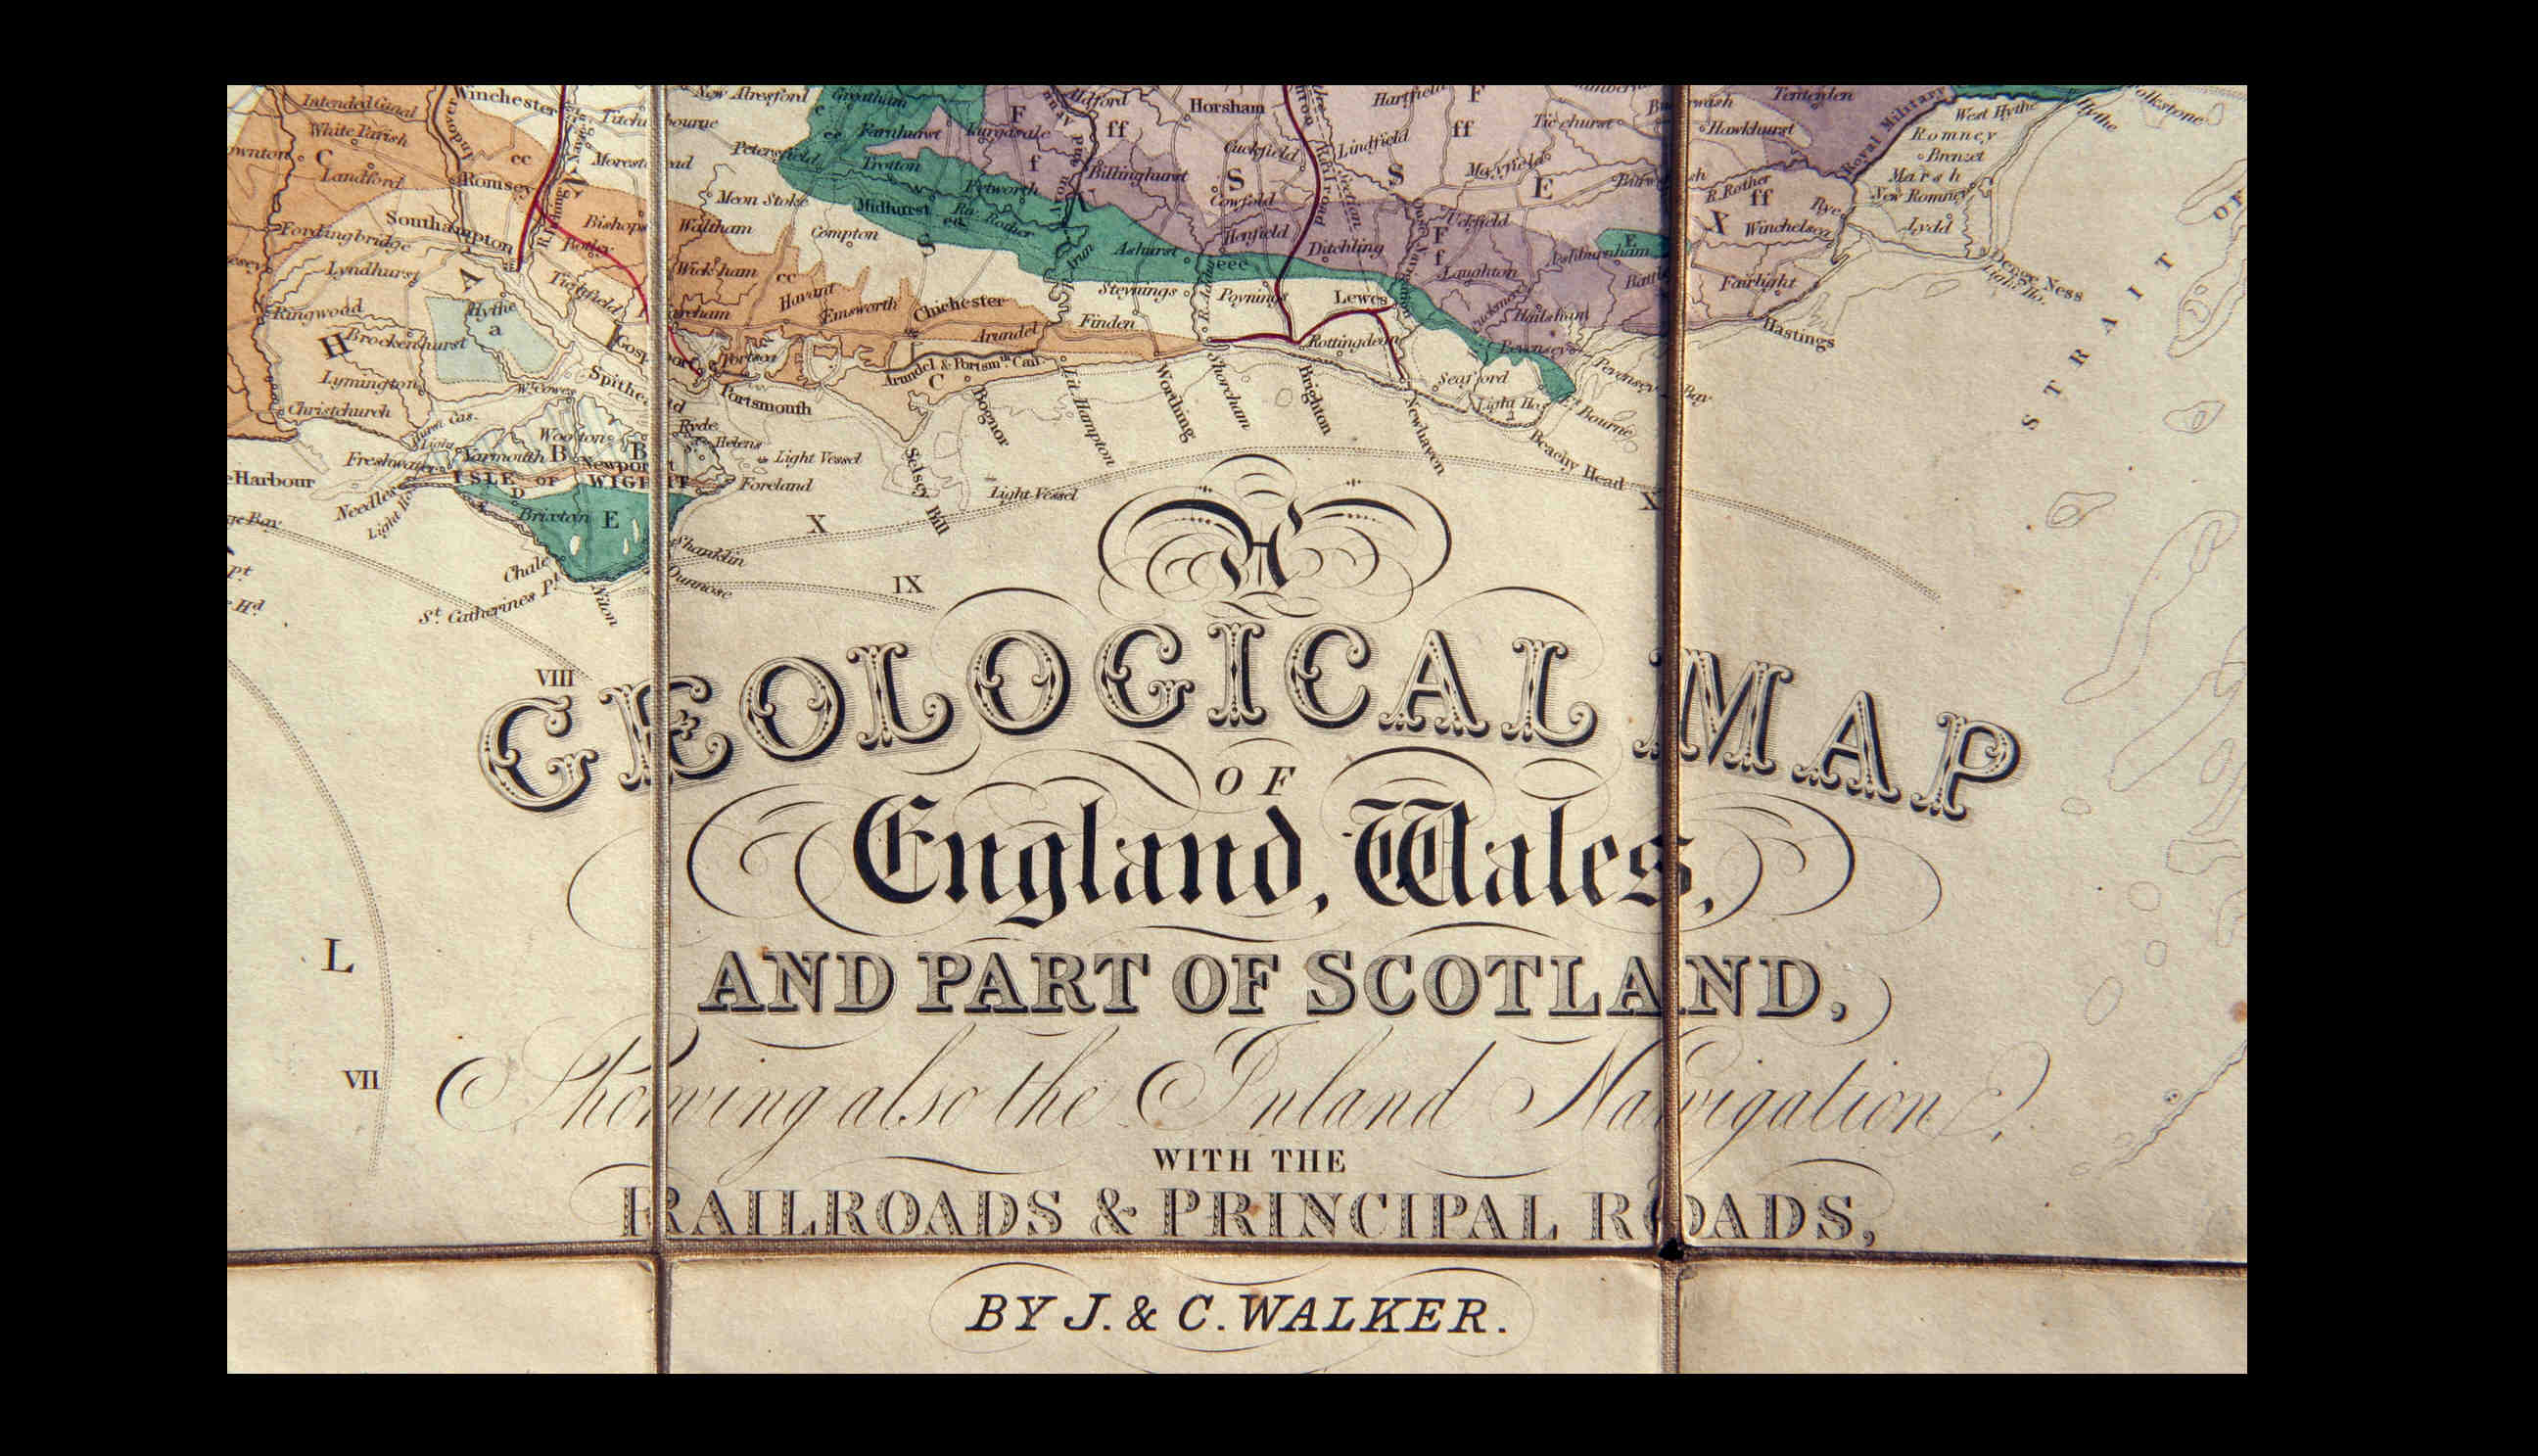 Detail.. Sussex coast... Walker 1838 geological map